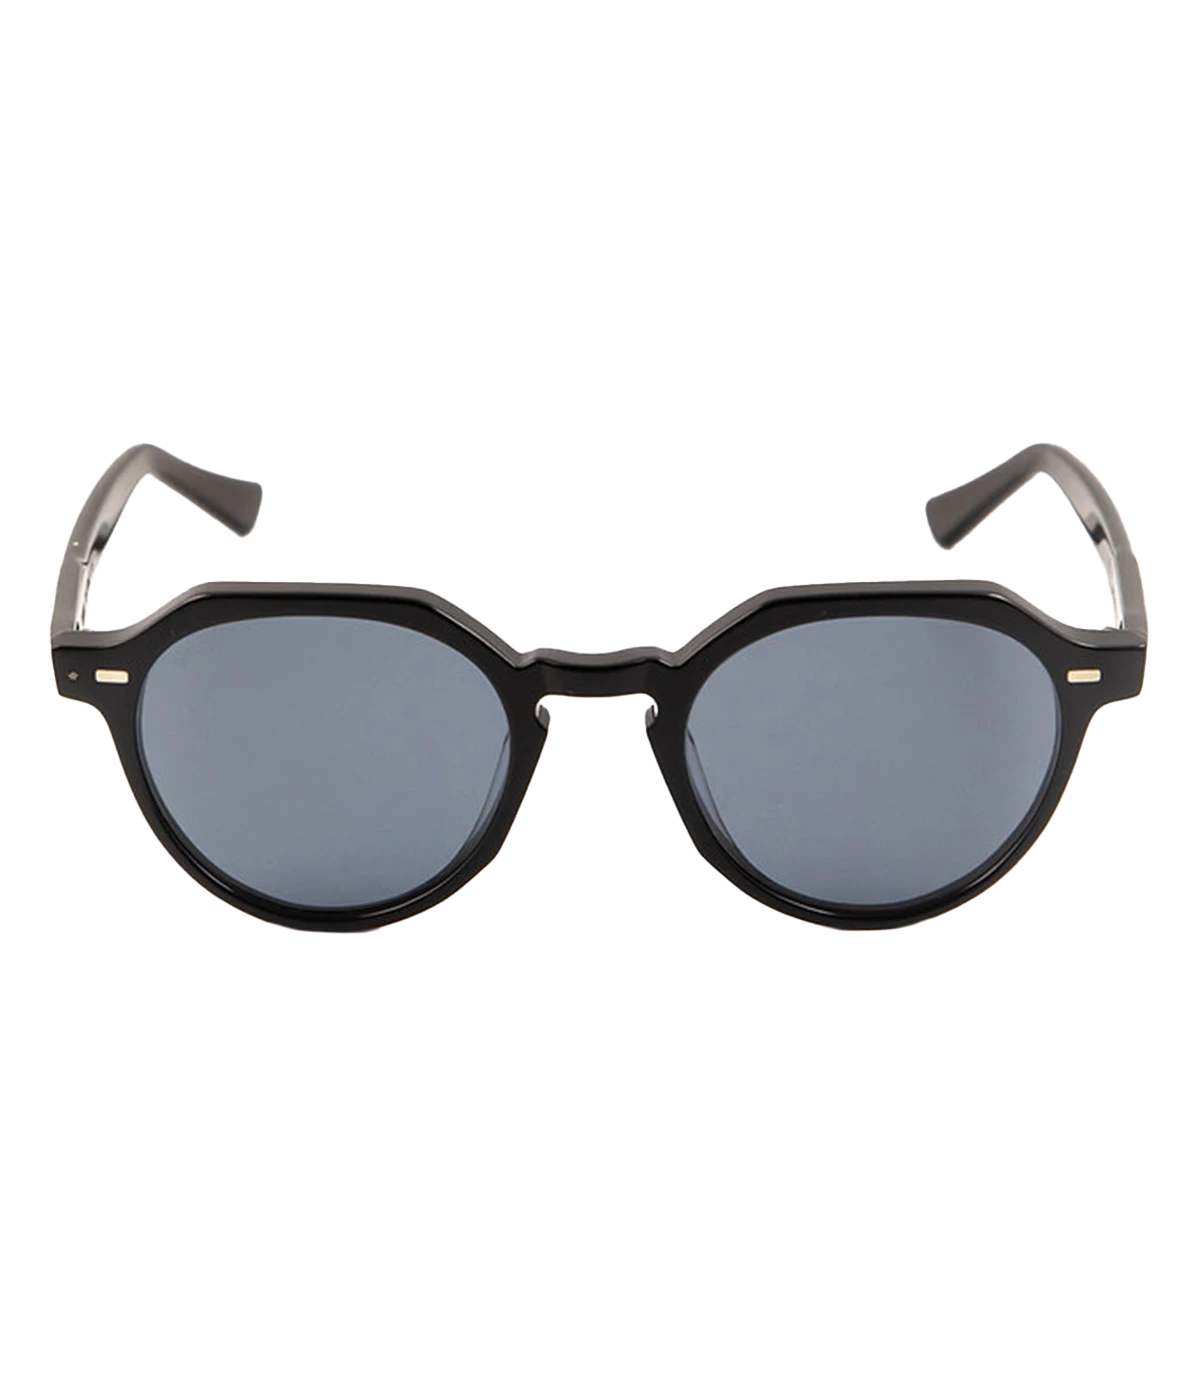 Amalfi Sunglasses in Black